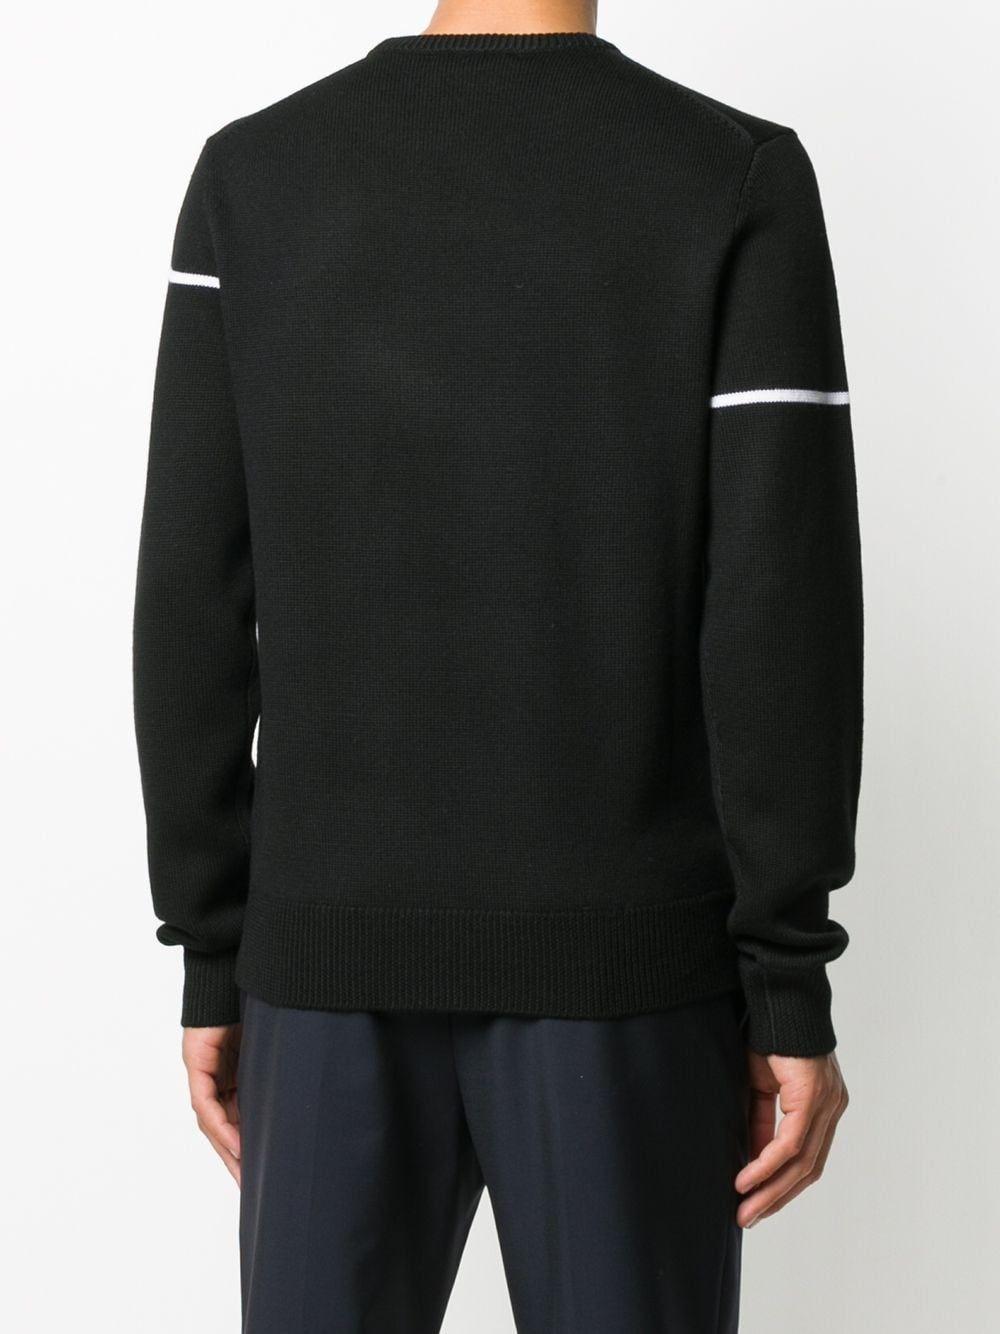 Givenchy Wool Logo Knit Jumper in Black for Men - Lyst